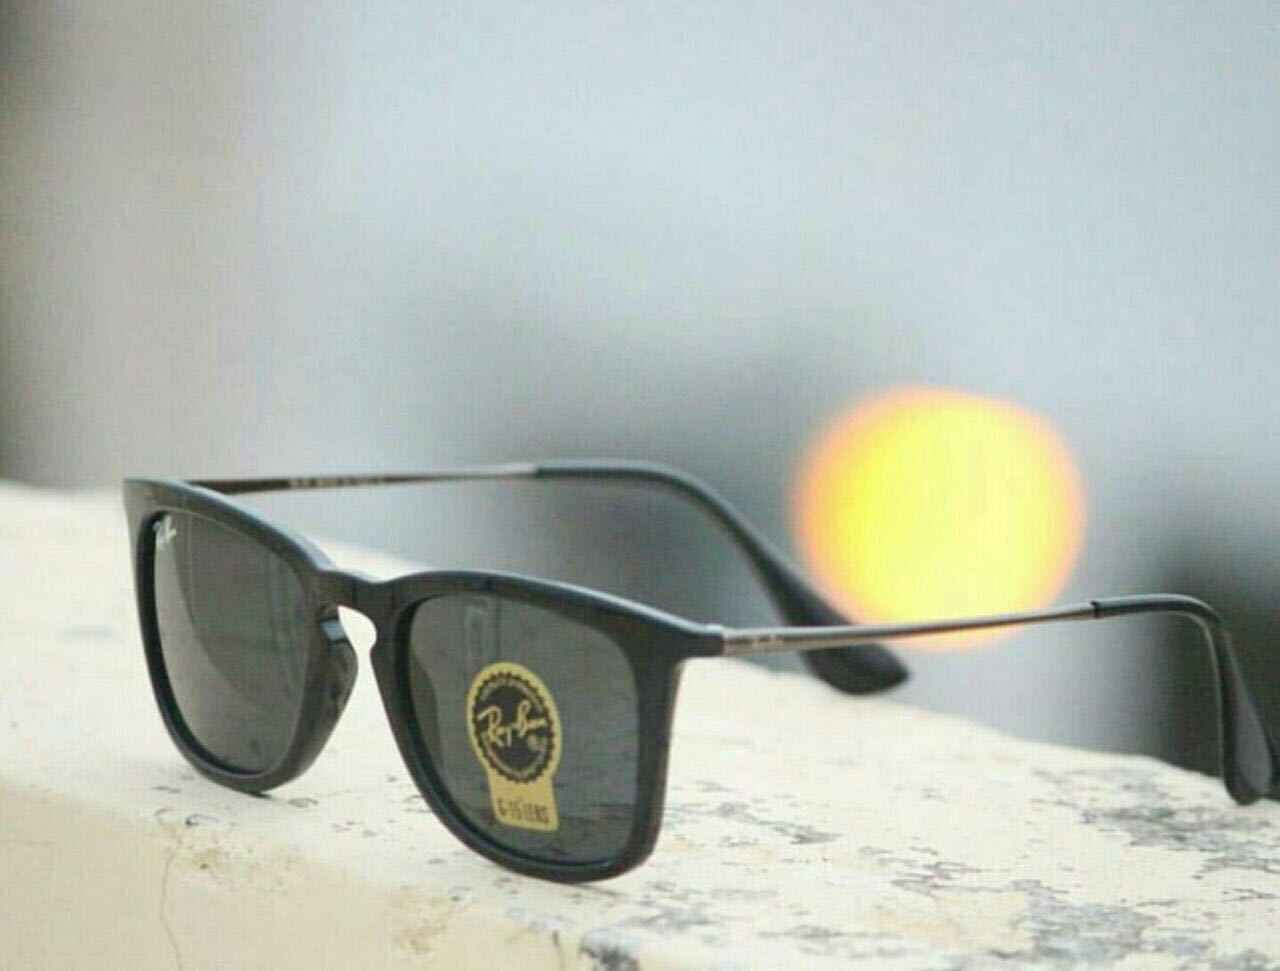 Black & Black ( 4221 ) New Day-Night Men's Sunglasses.